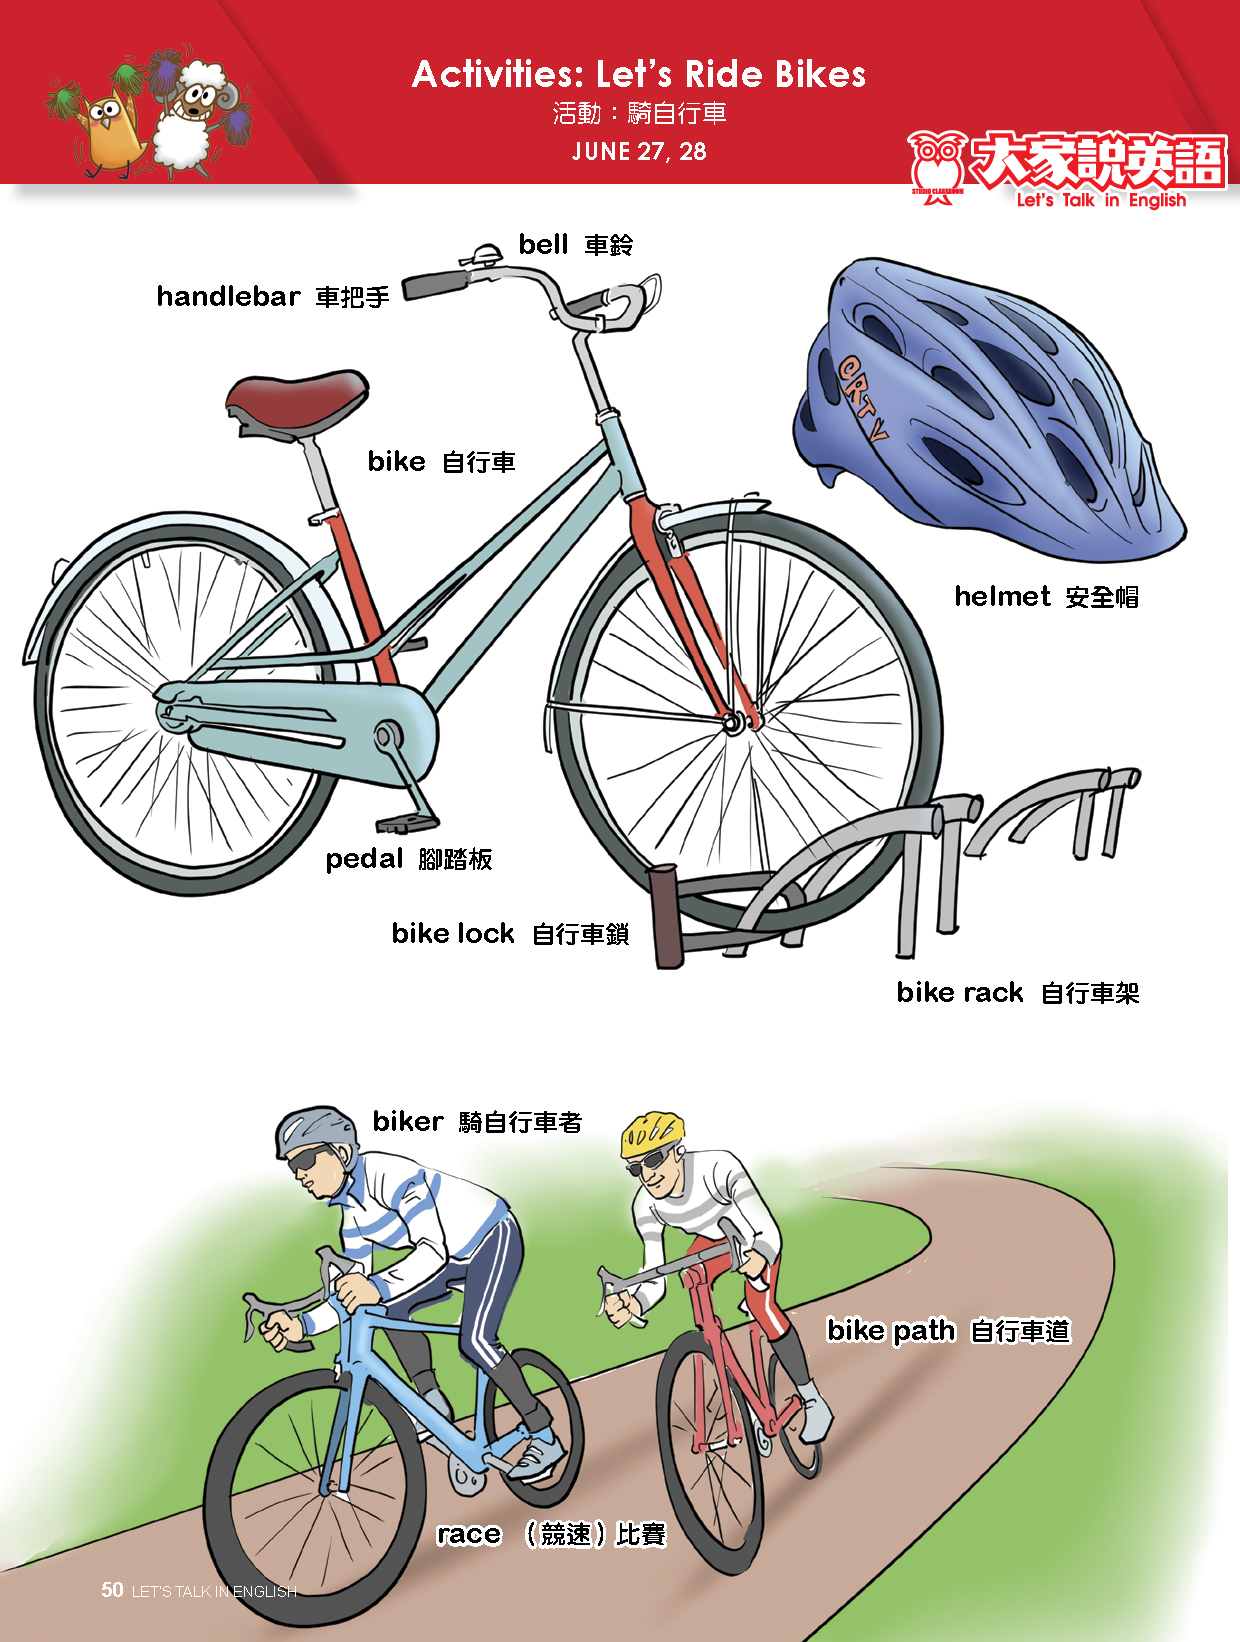 【Visual English】Activities: Let’s Ride Bikes